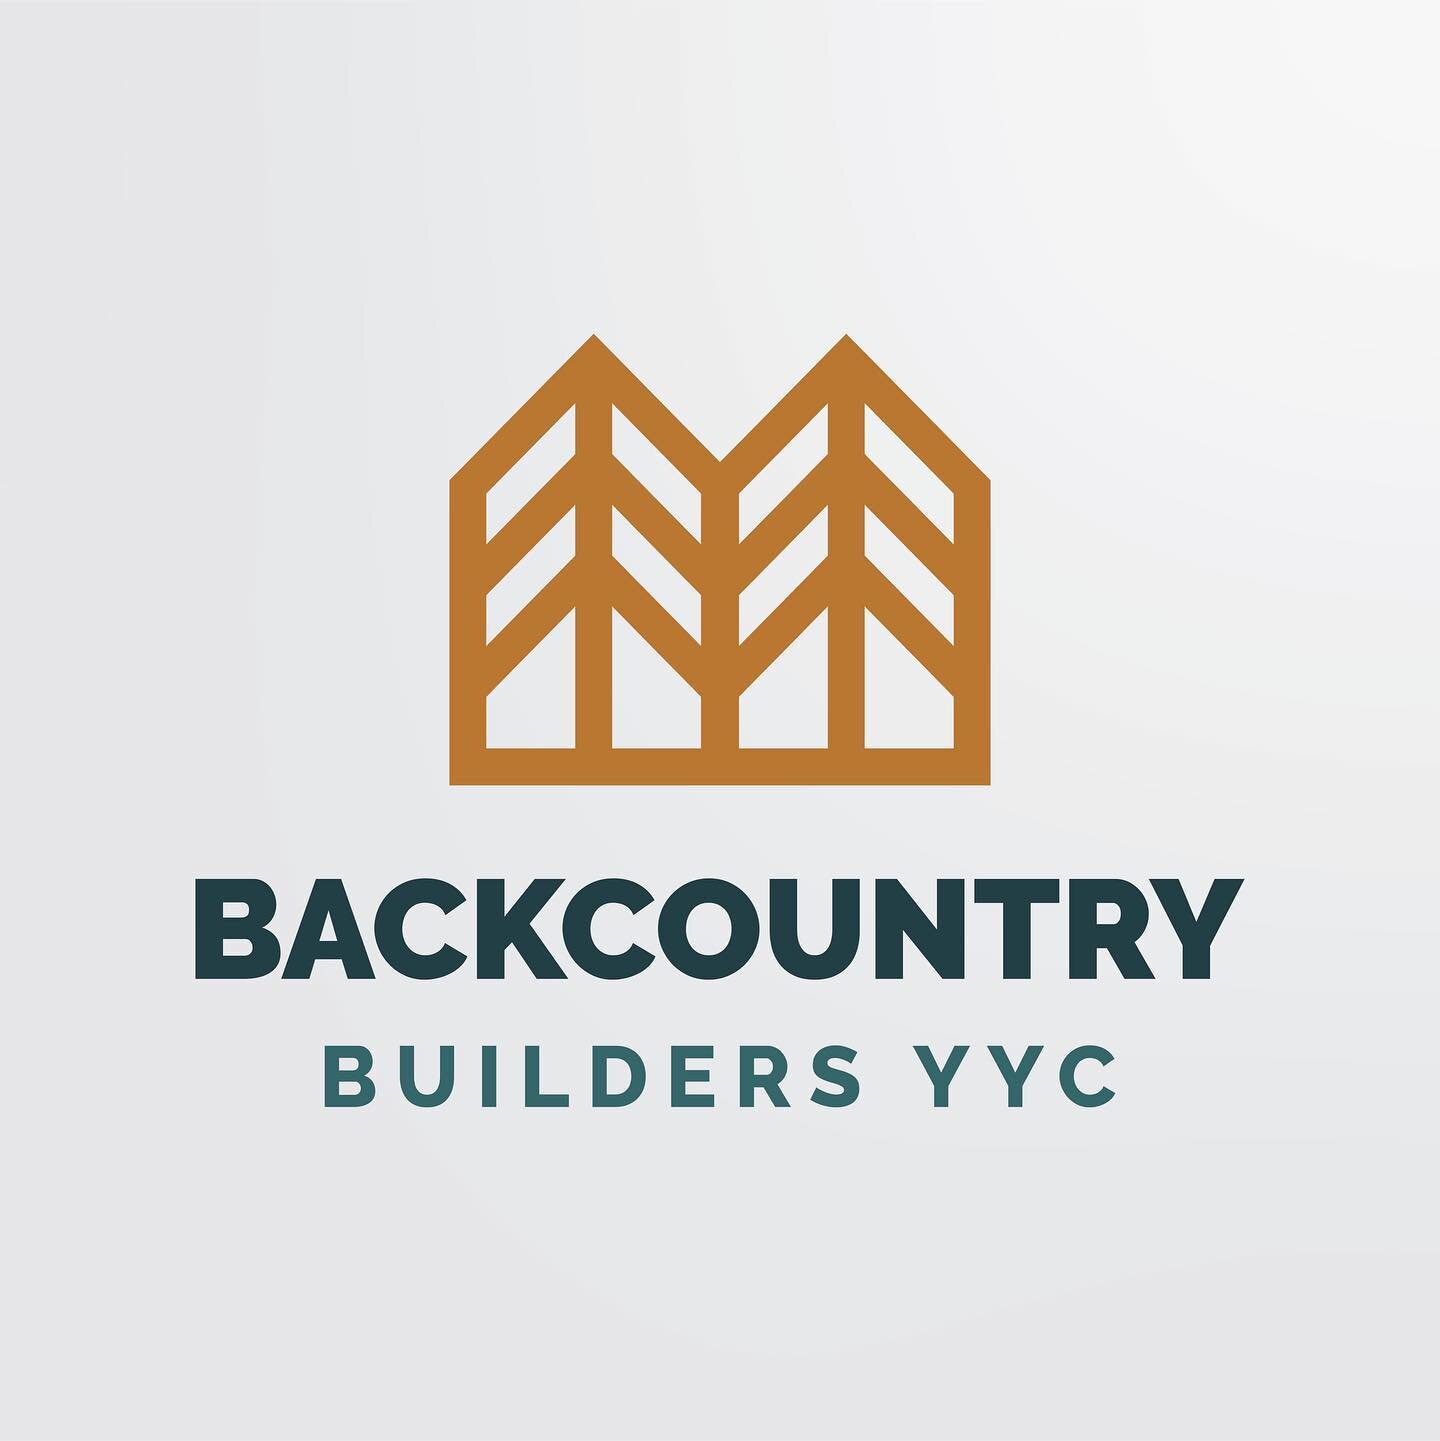 Fresh Brand Identity for Backcountry Builders YYC 🌲